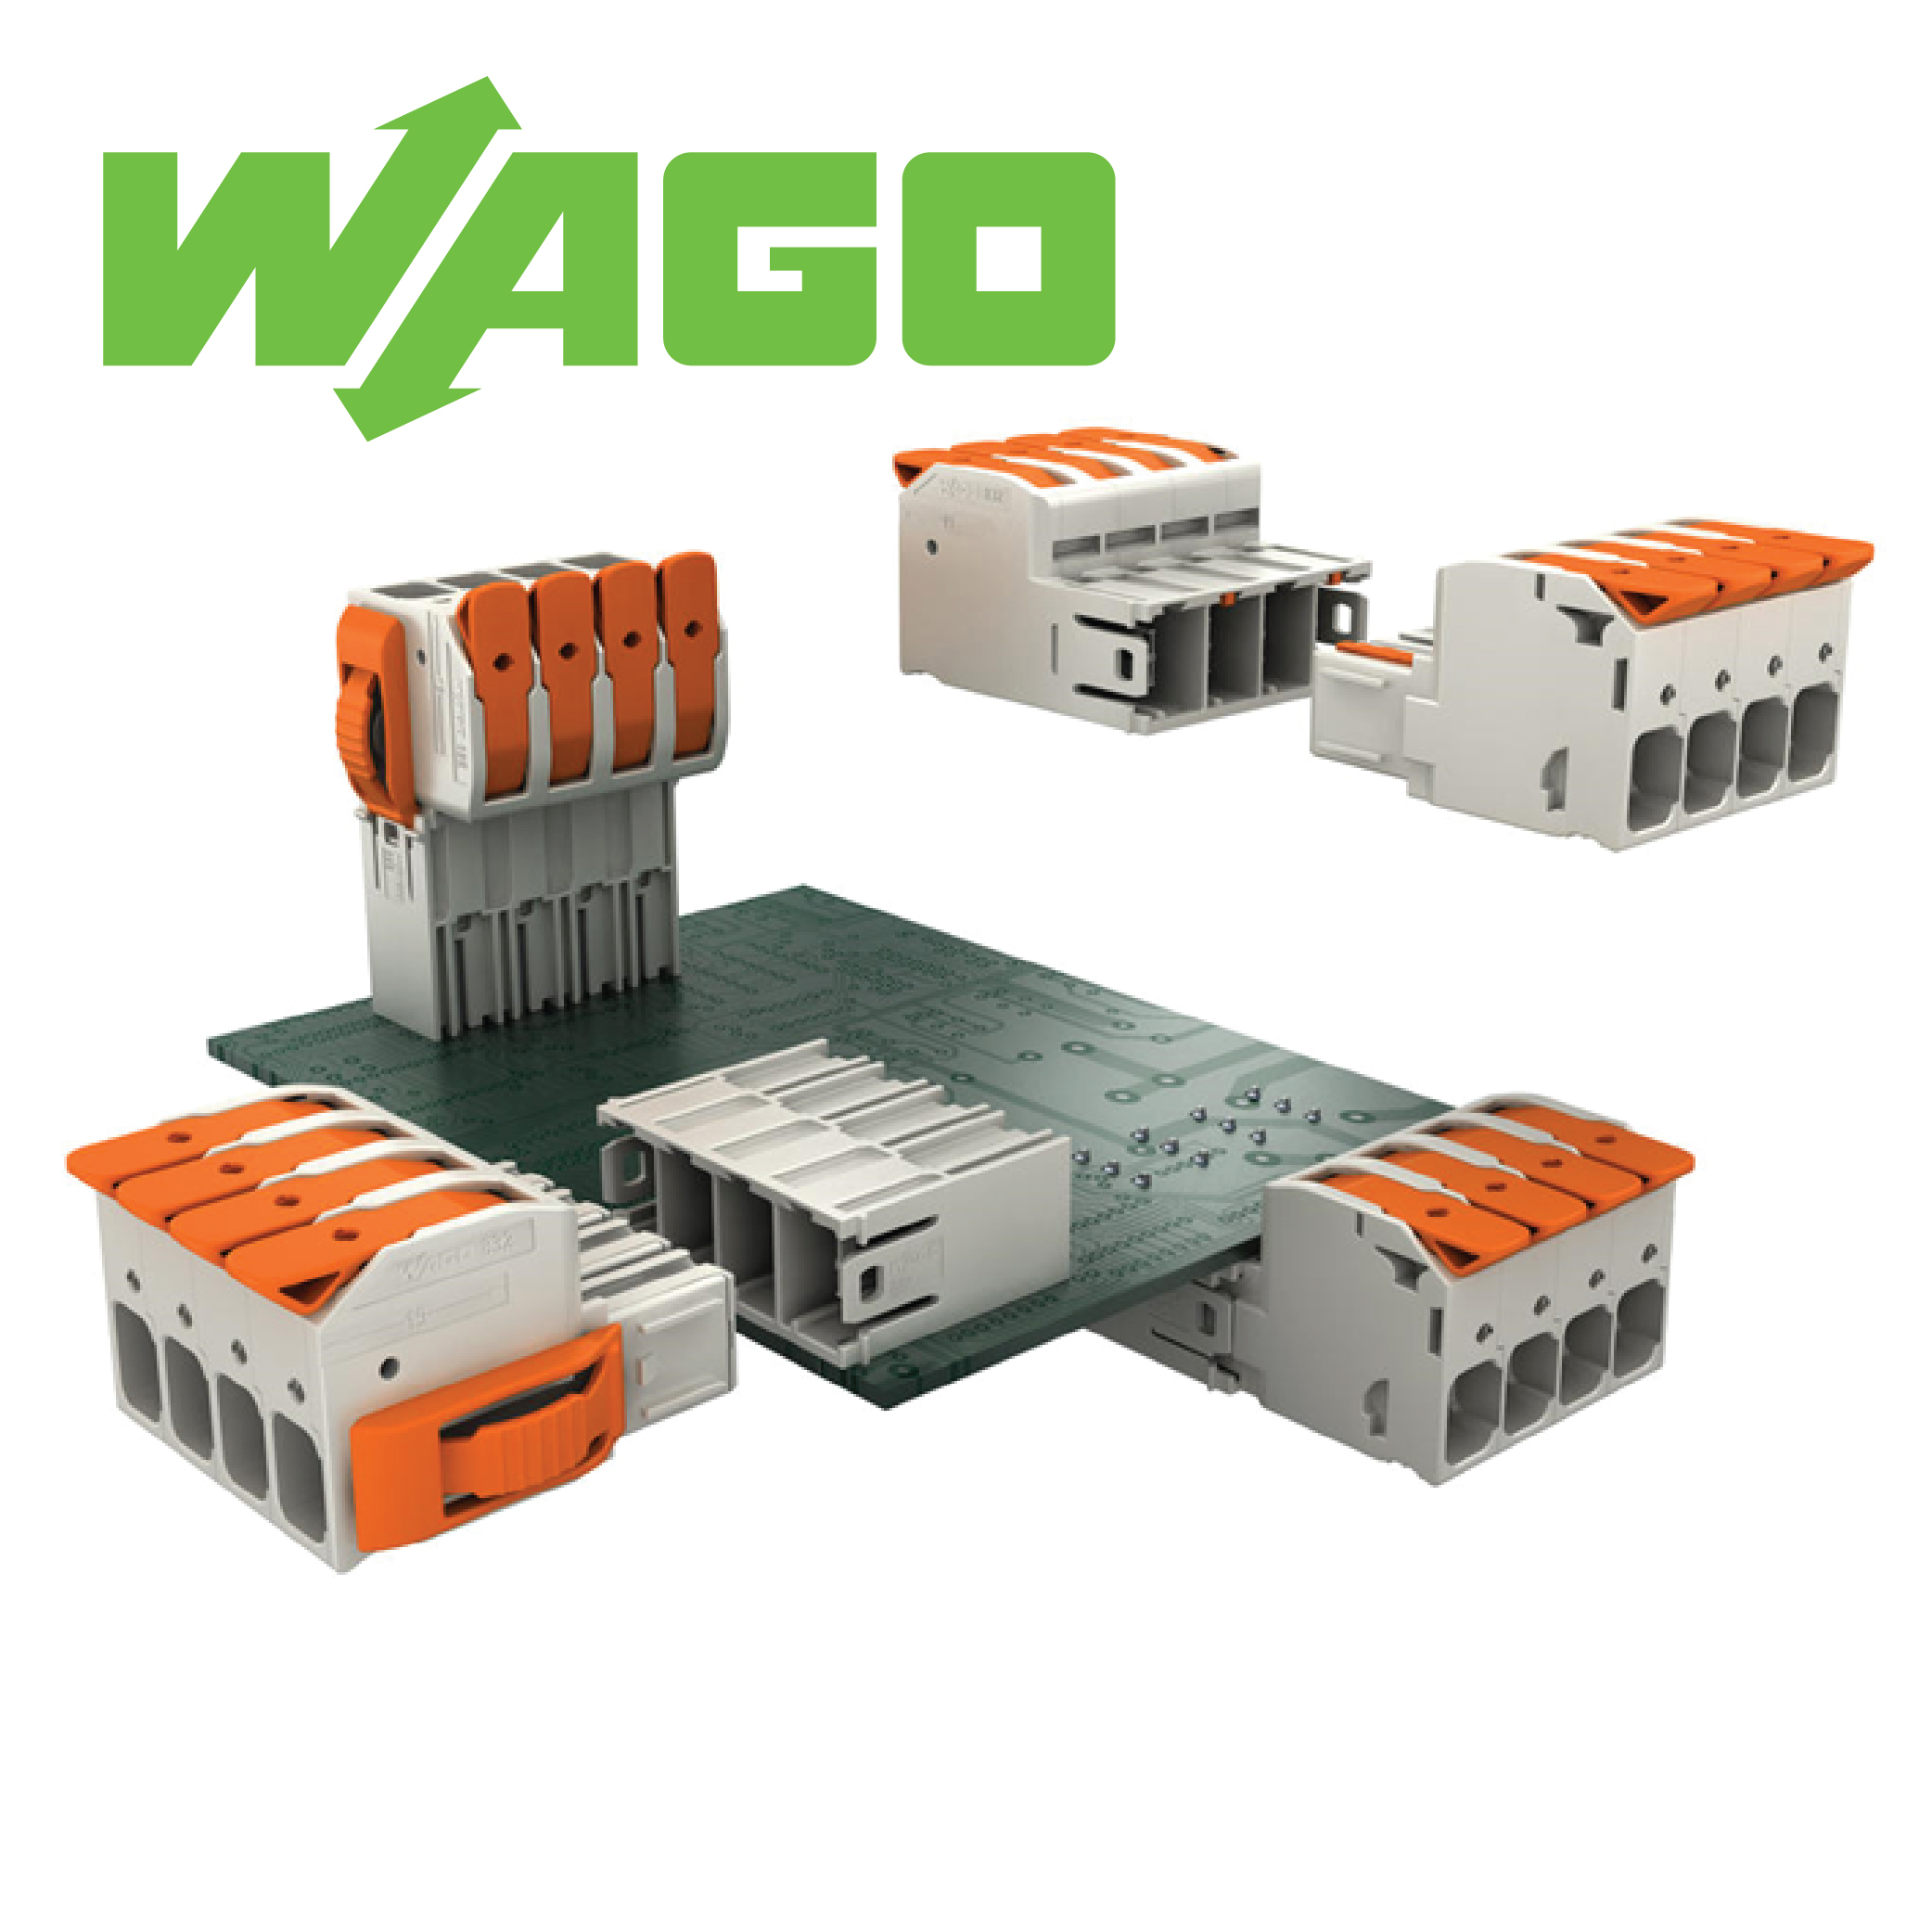 PCB Terminal Blocks for Power Electronics